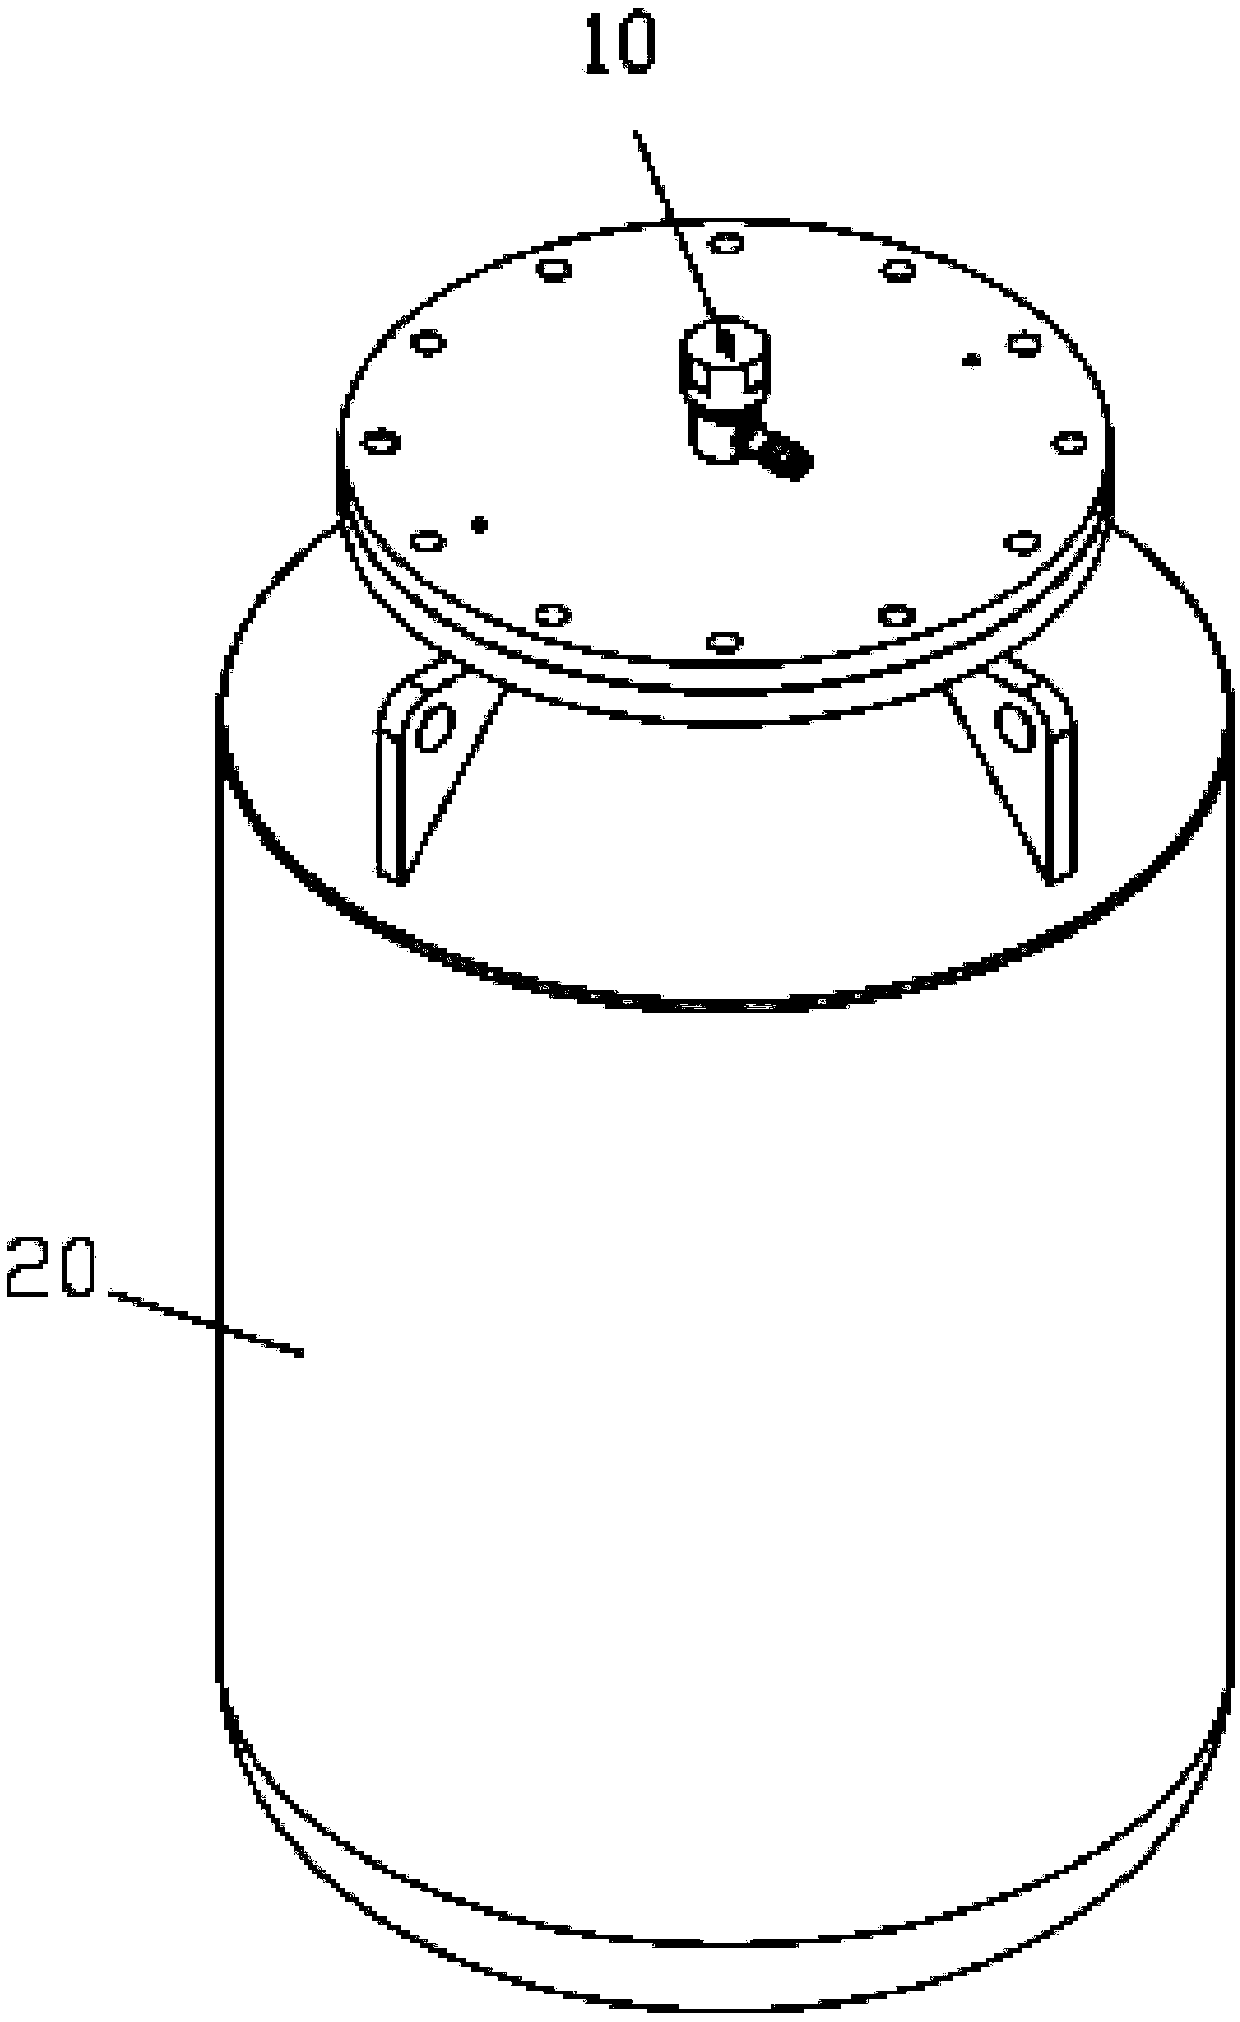 Outward turning vacuumizing seal assembly for high-temperature vacuum sintering furnace and vacuumizing charging bucket